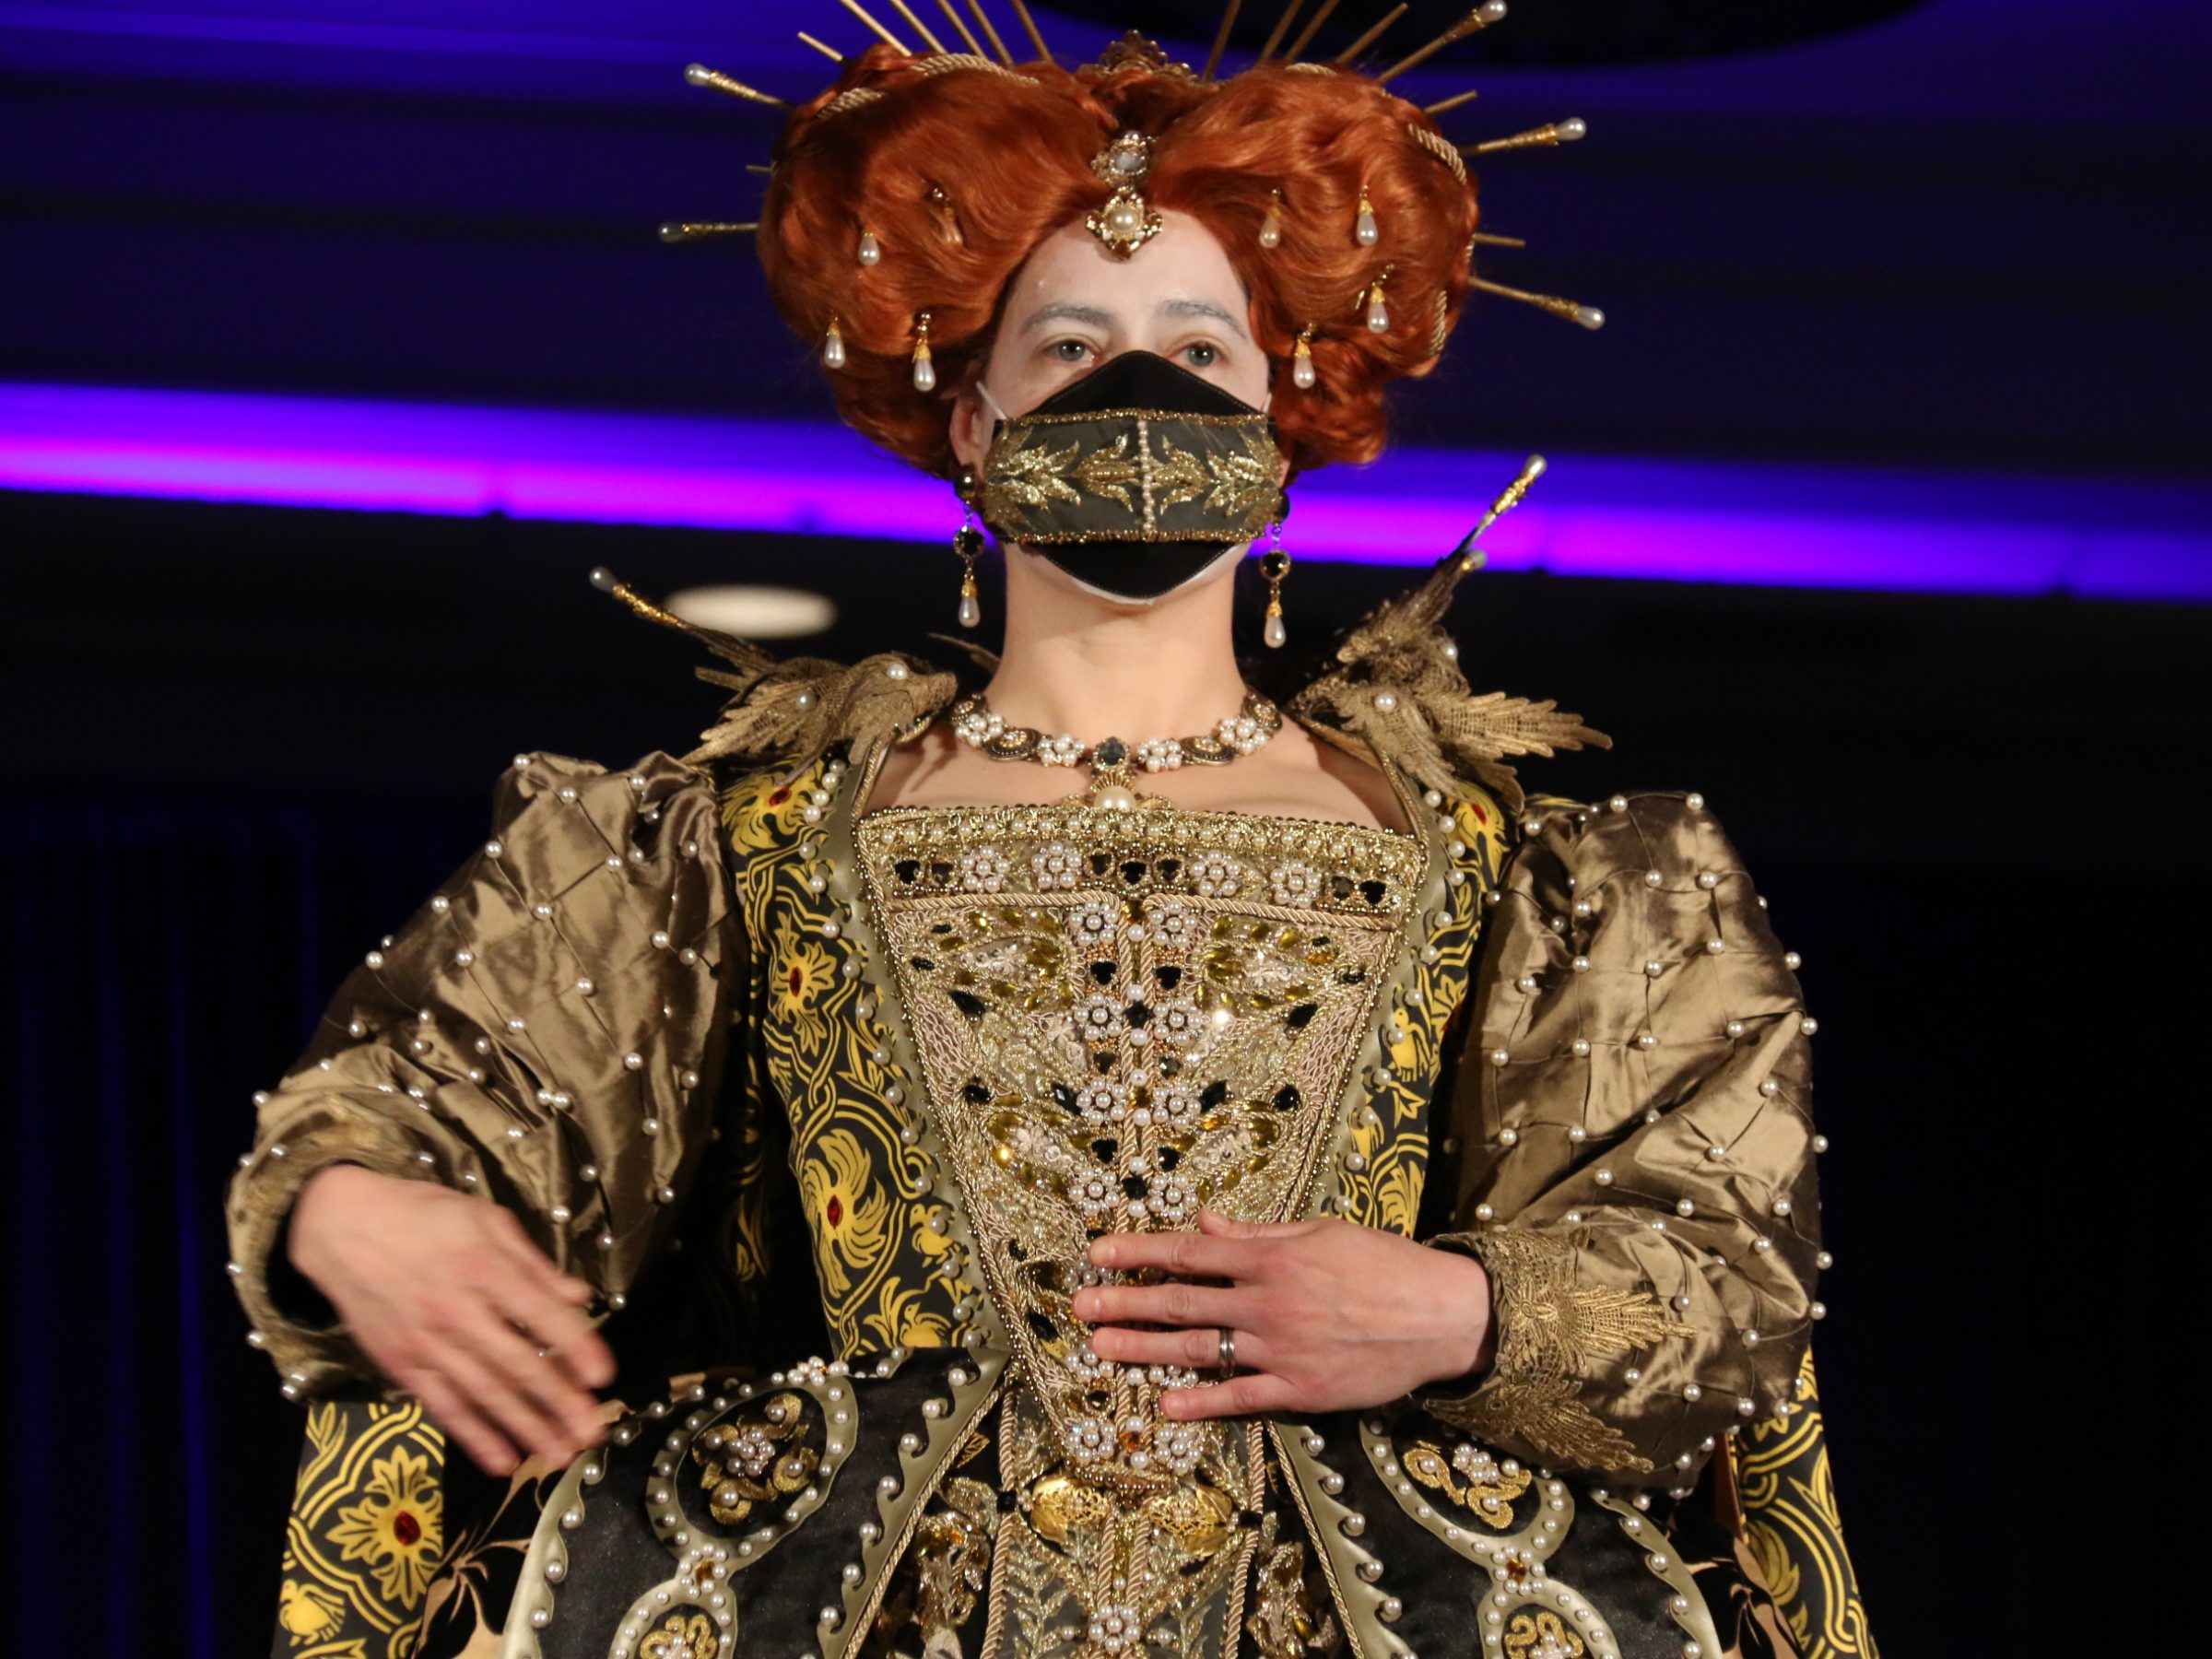 Historical Masquerade - Elizabeth from Shakespeare in Love